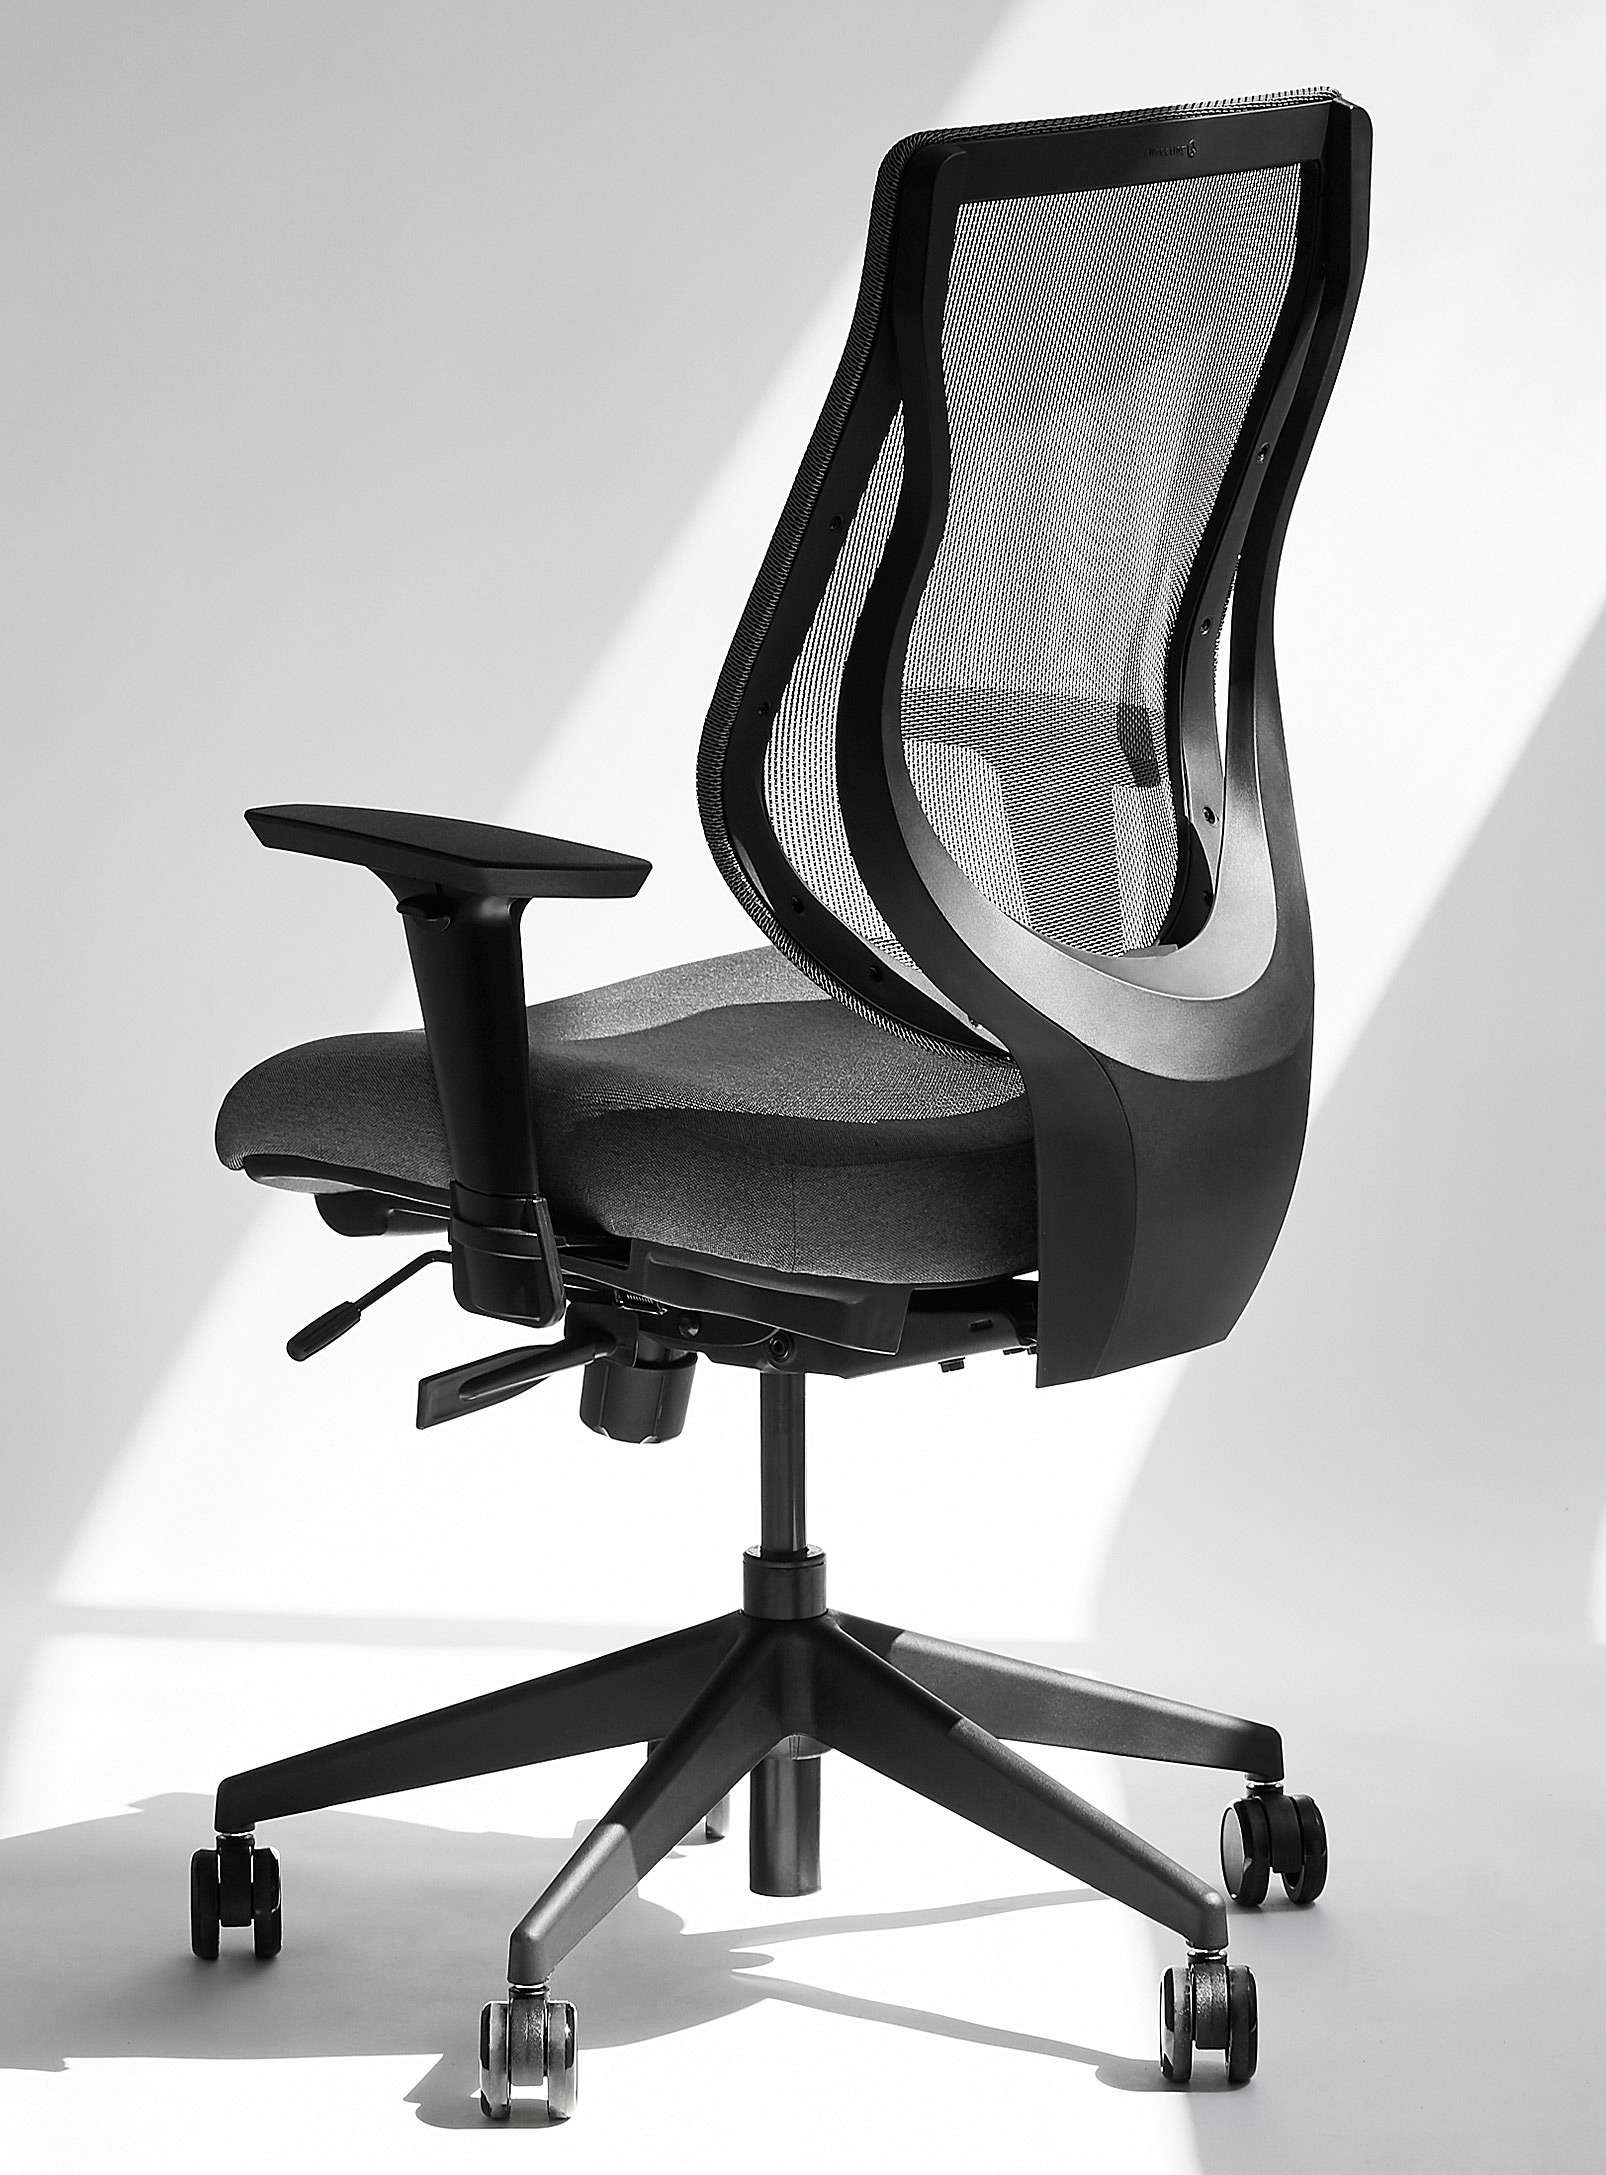 Ergonofis Youtoo Ergonomic Chair With Fabric Seat Black Base In Dark Grey